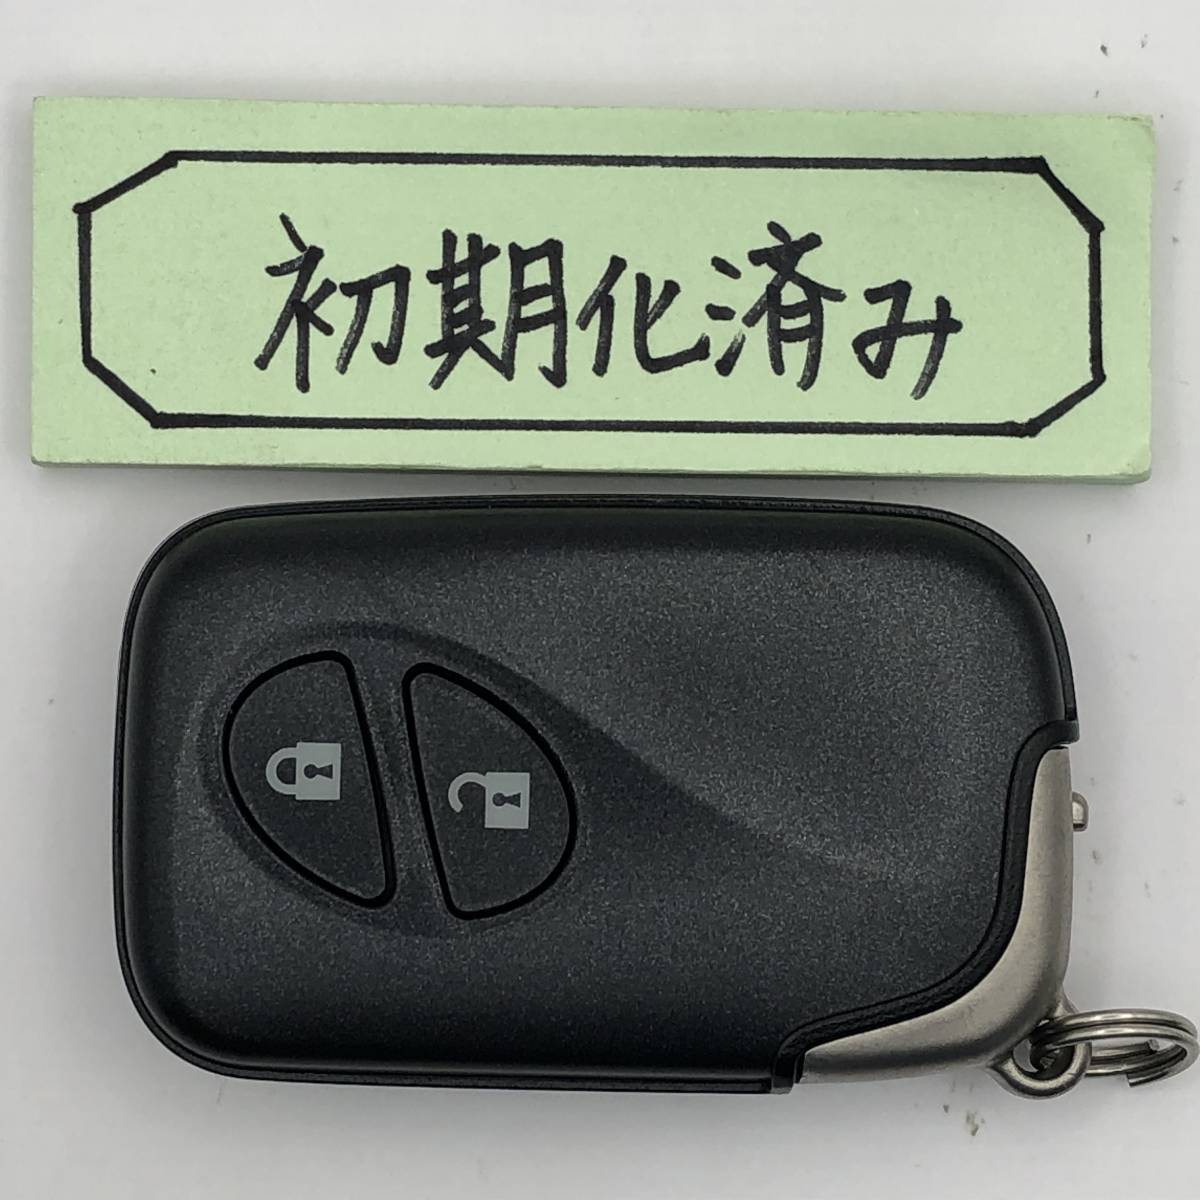 LM35  инициализация ...  Lexus  Toyota   смарт-ключ   CT HS GS IS 271451-5300 001 YUA1033 14ADA-02  регистрация  работа   возможно      префектура Сайтама  ... город 